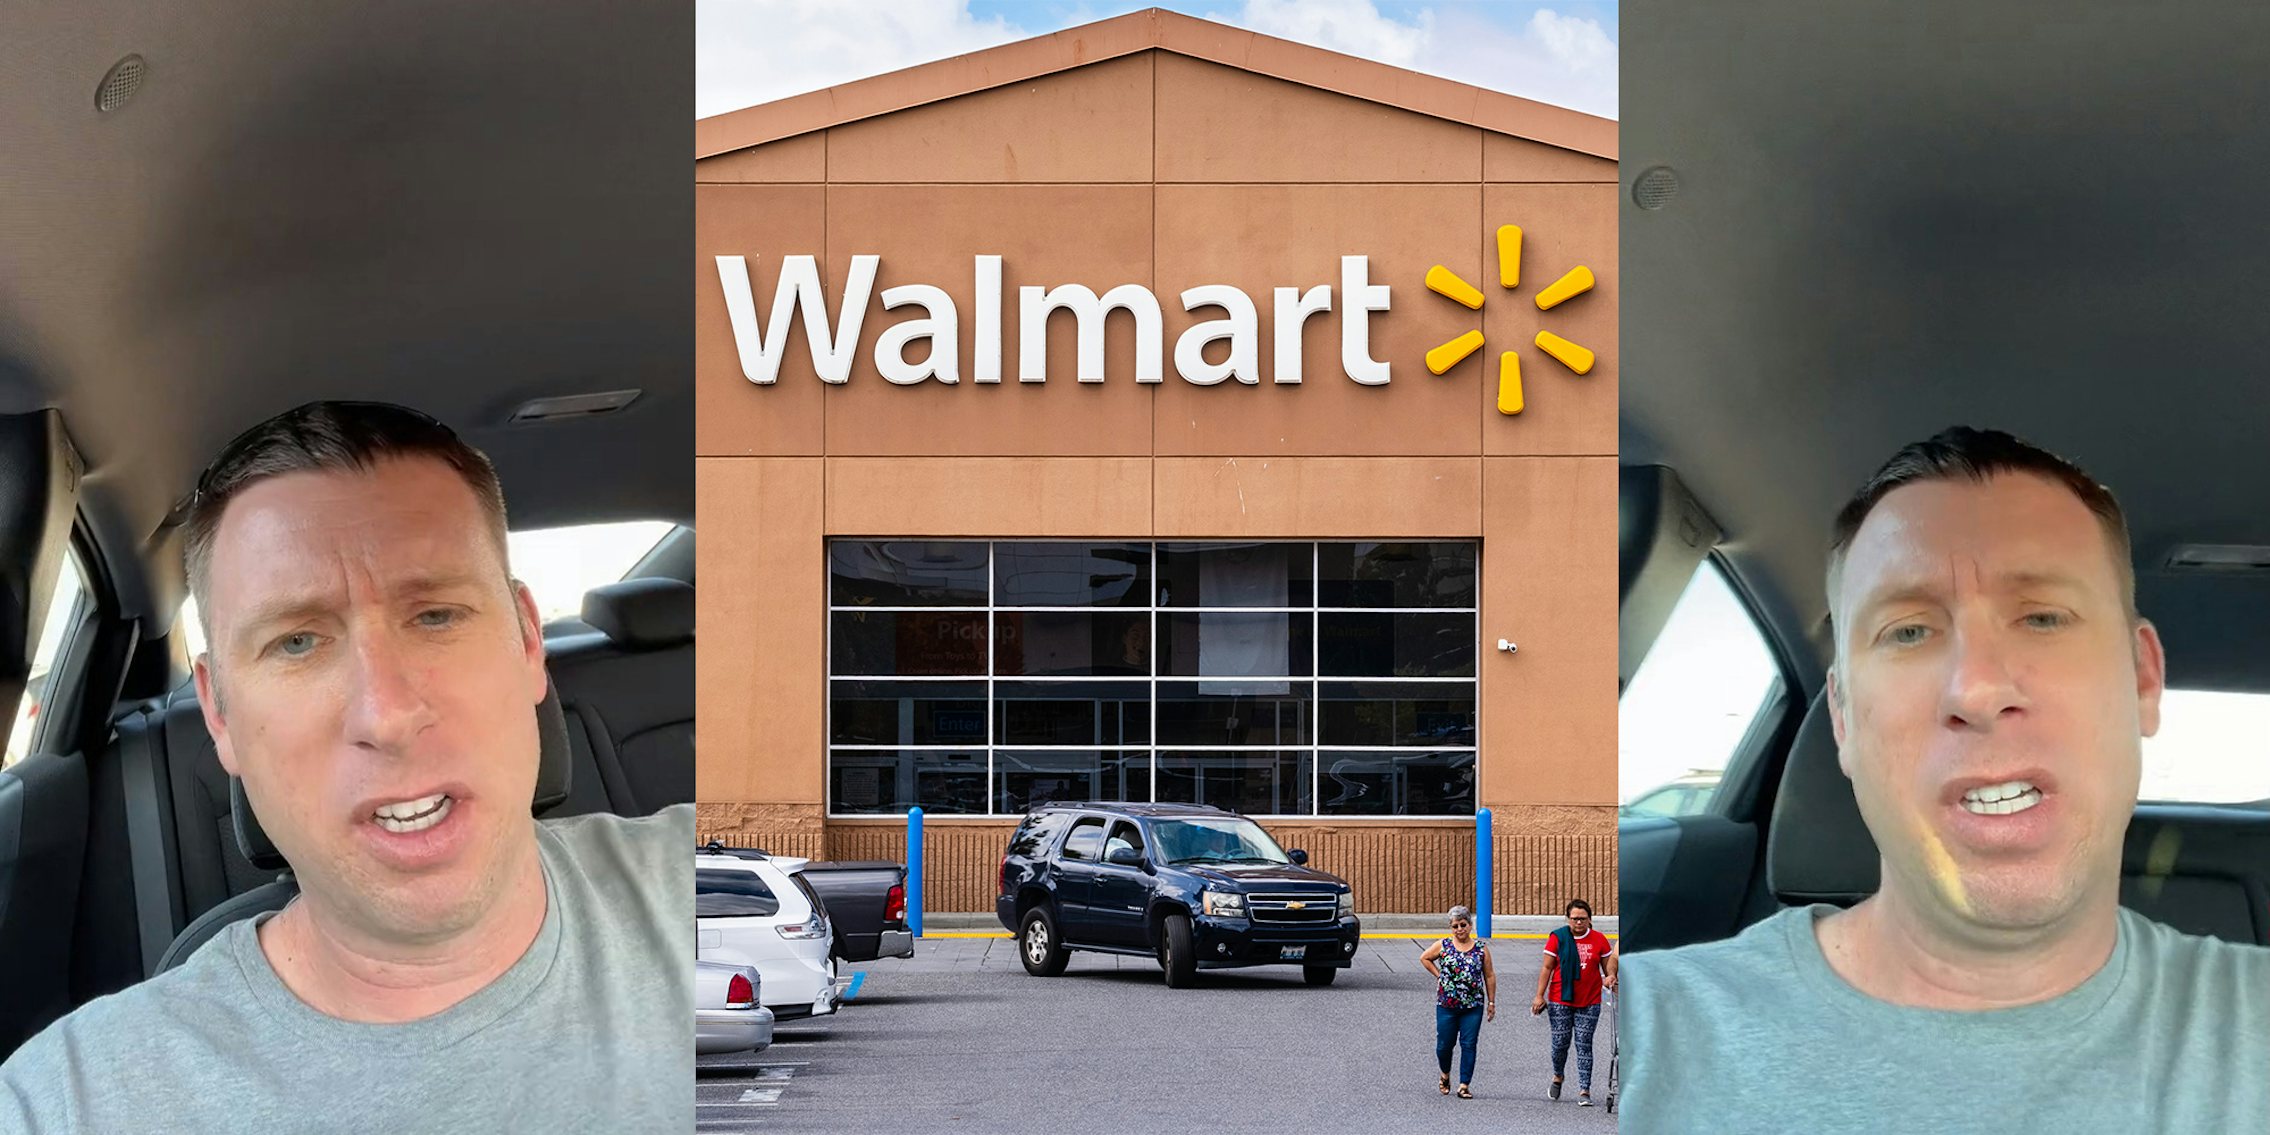 Walmart customer has worker go through parking lot just to check receipt